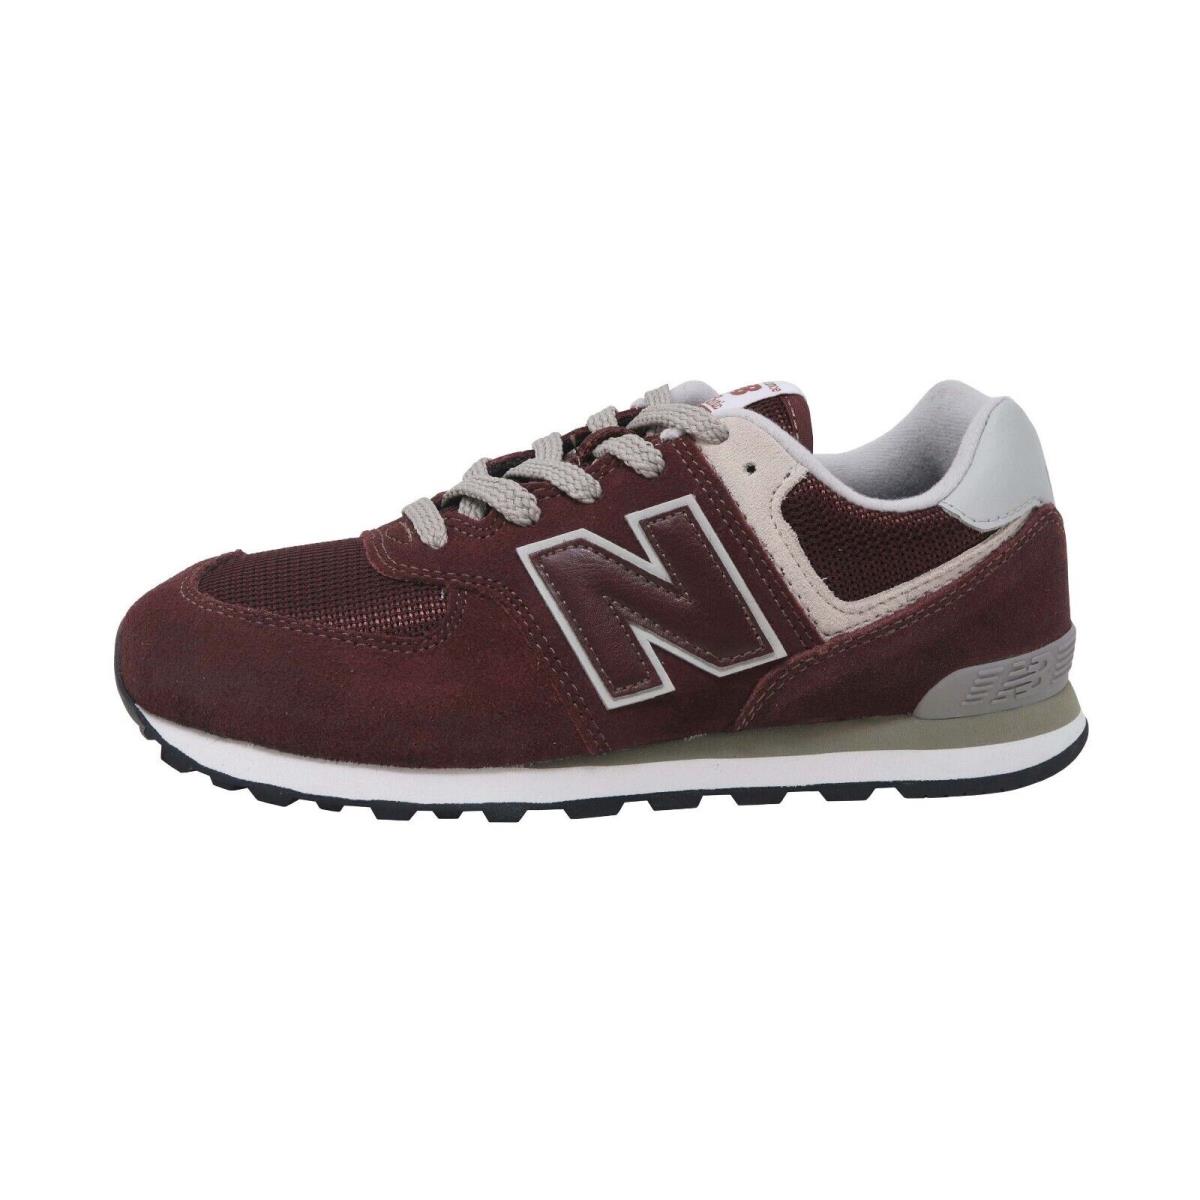 New Balance 574 Classic Big Kids Running Shoes Sneakers GC574GB - Burgundy